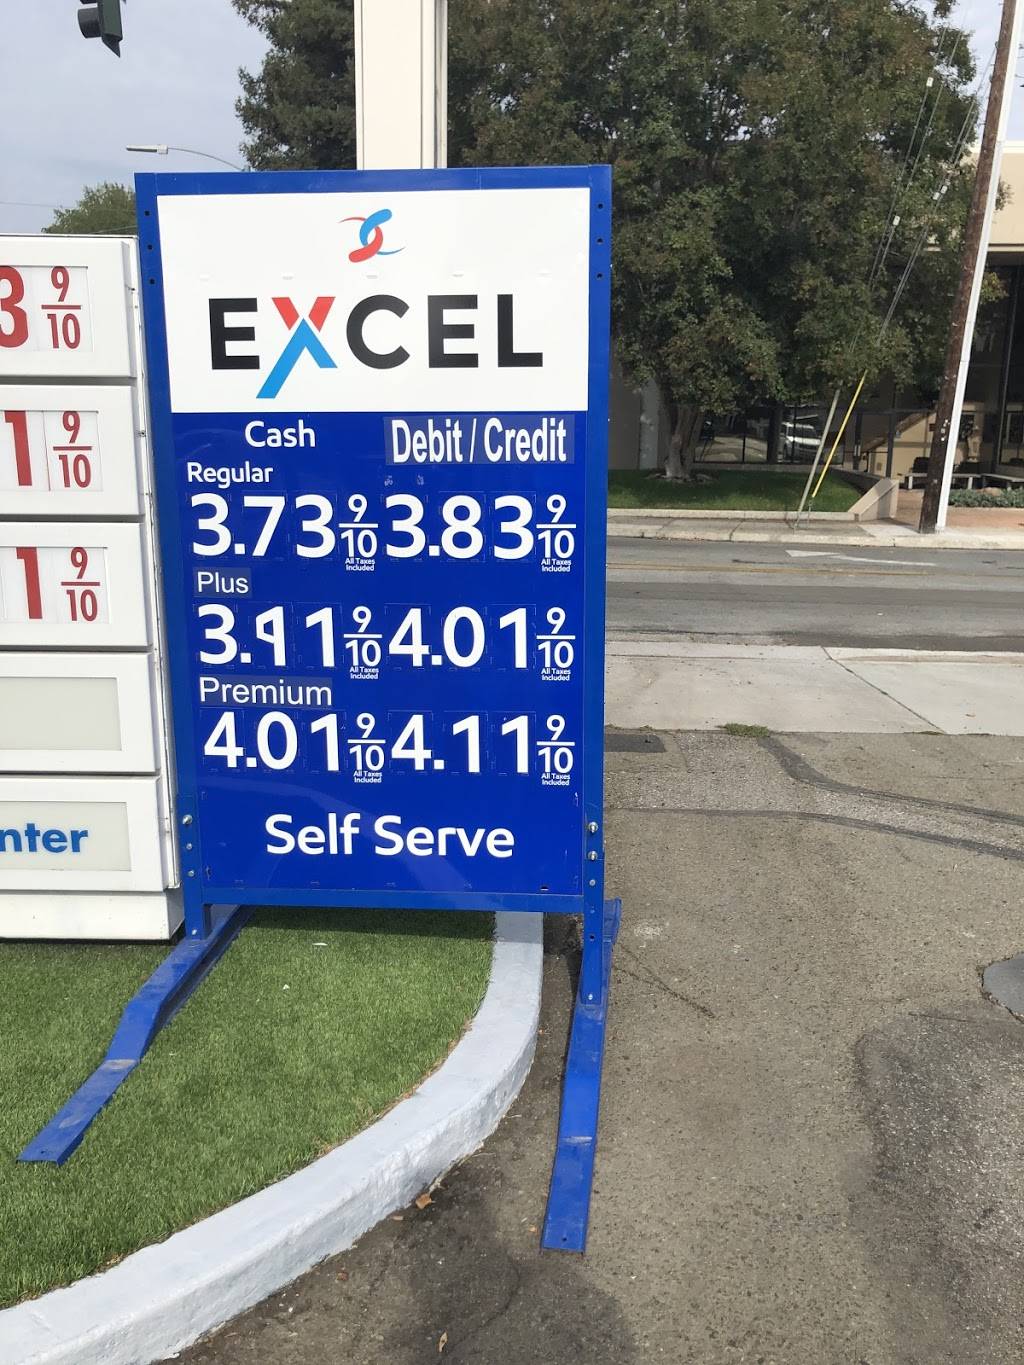 Excel Gas & Mart | 1120 N 1st St &, Burton Ave, San Jose, CA 95112 | Phone: (408) 292-1668